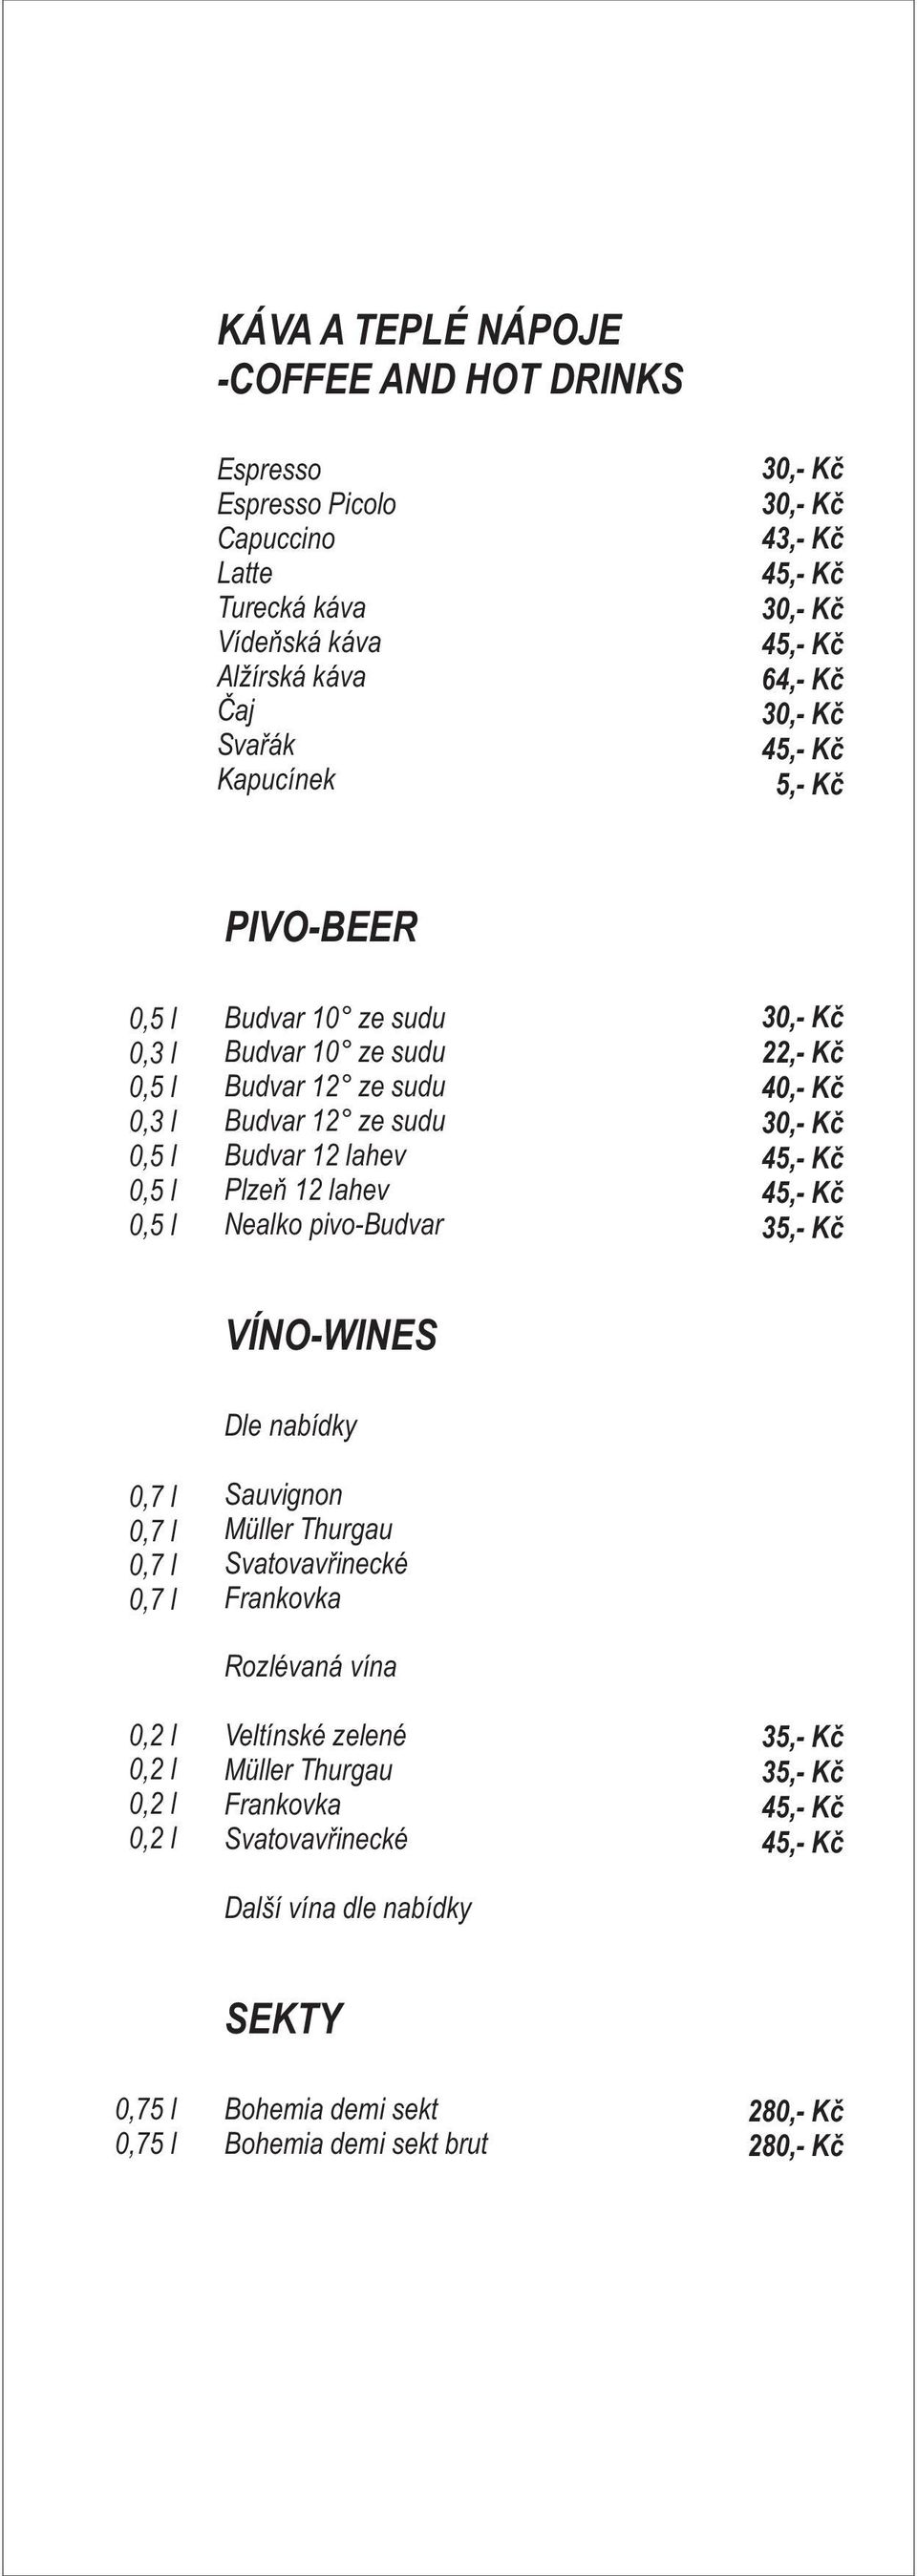 lahev Plzeň 12 lahev Nealko pivo-budvar 22,- Kč VÍNO-WINES Dle nabídky Sauvignon Müller Thurgau Svatovavřinecké Frankovka Rozlévaná vína